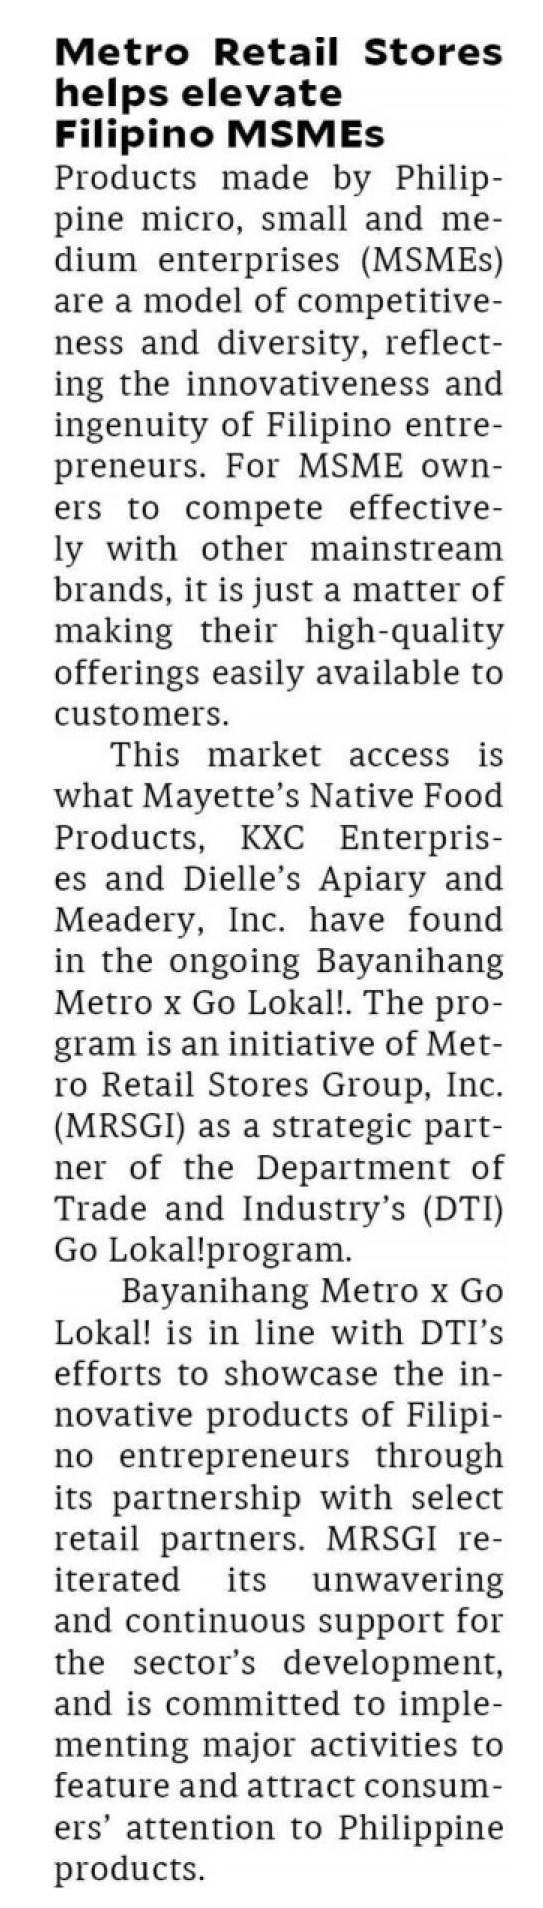 Metro Retail Stores helps elevate Filipino MSMEs